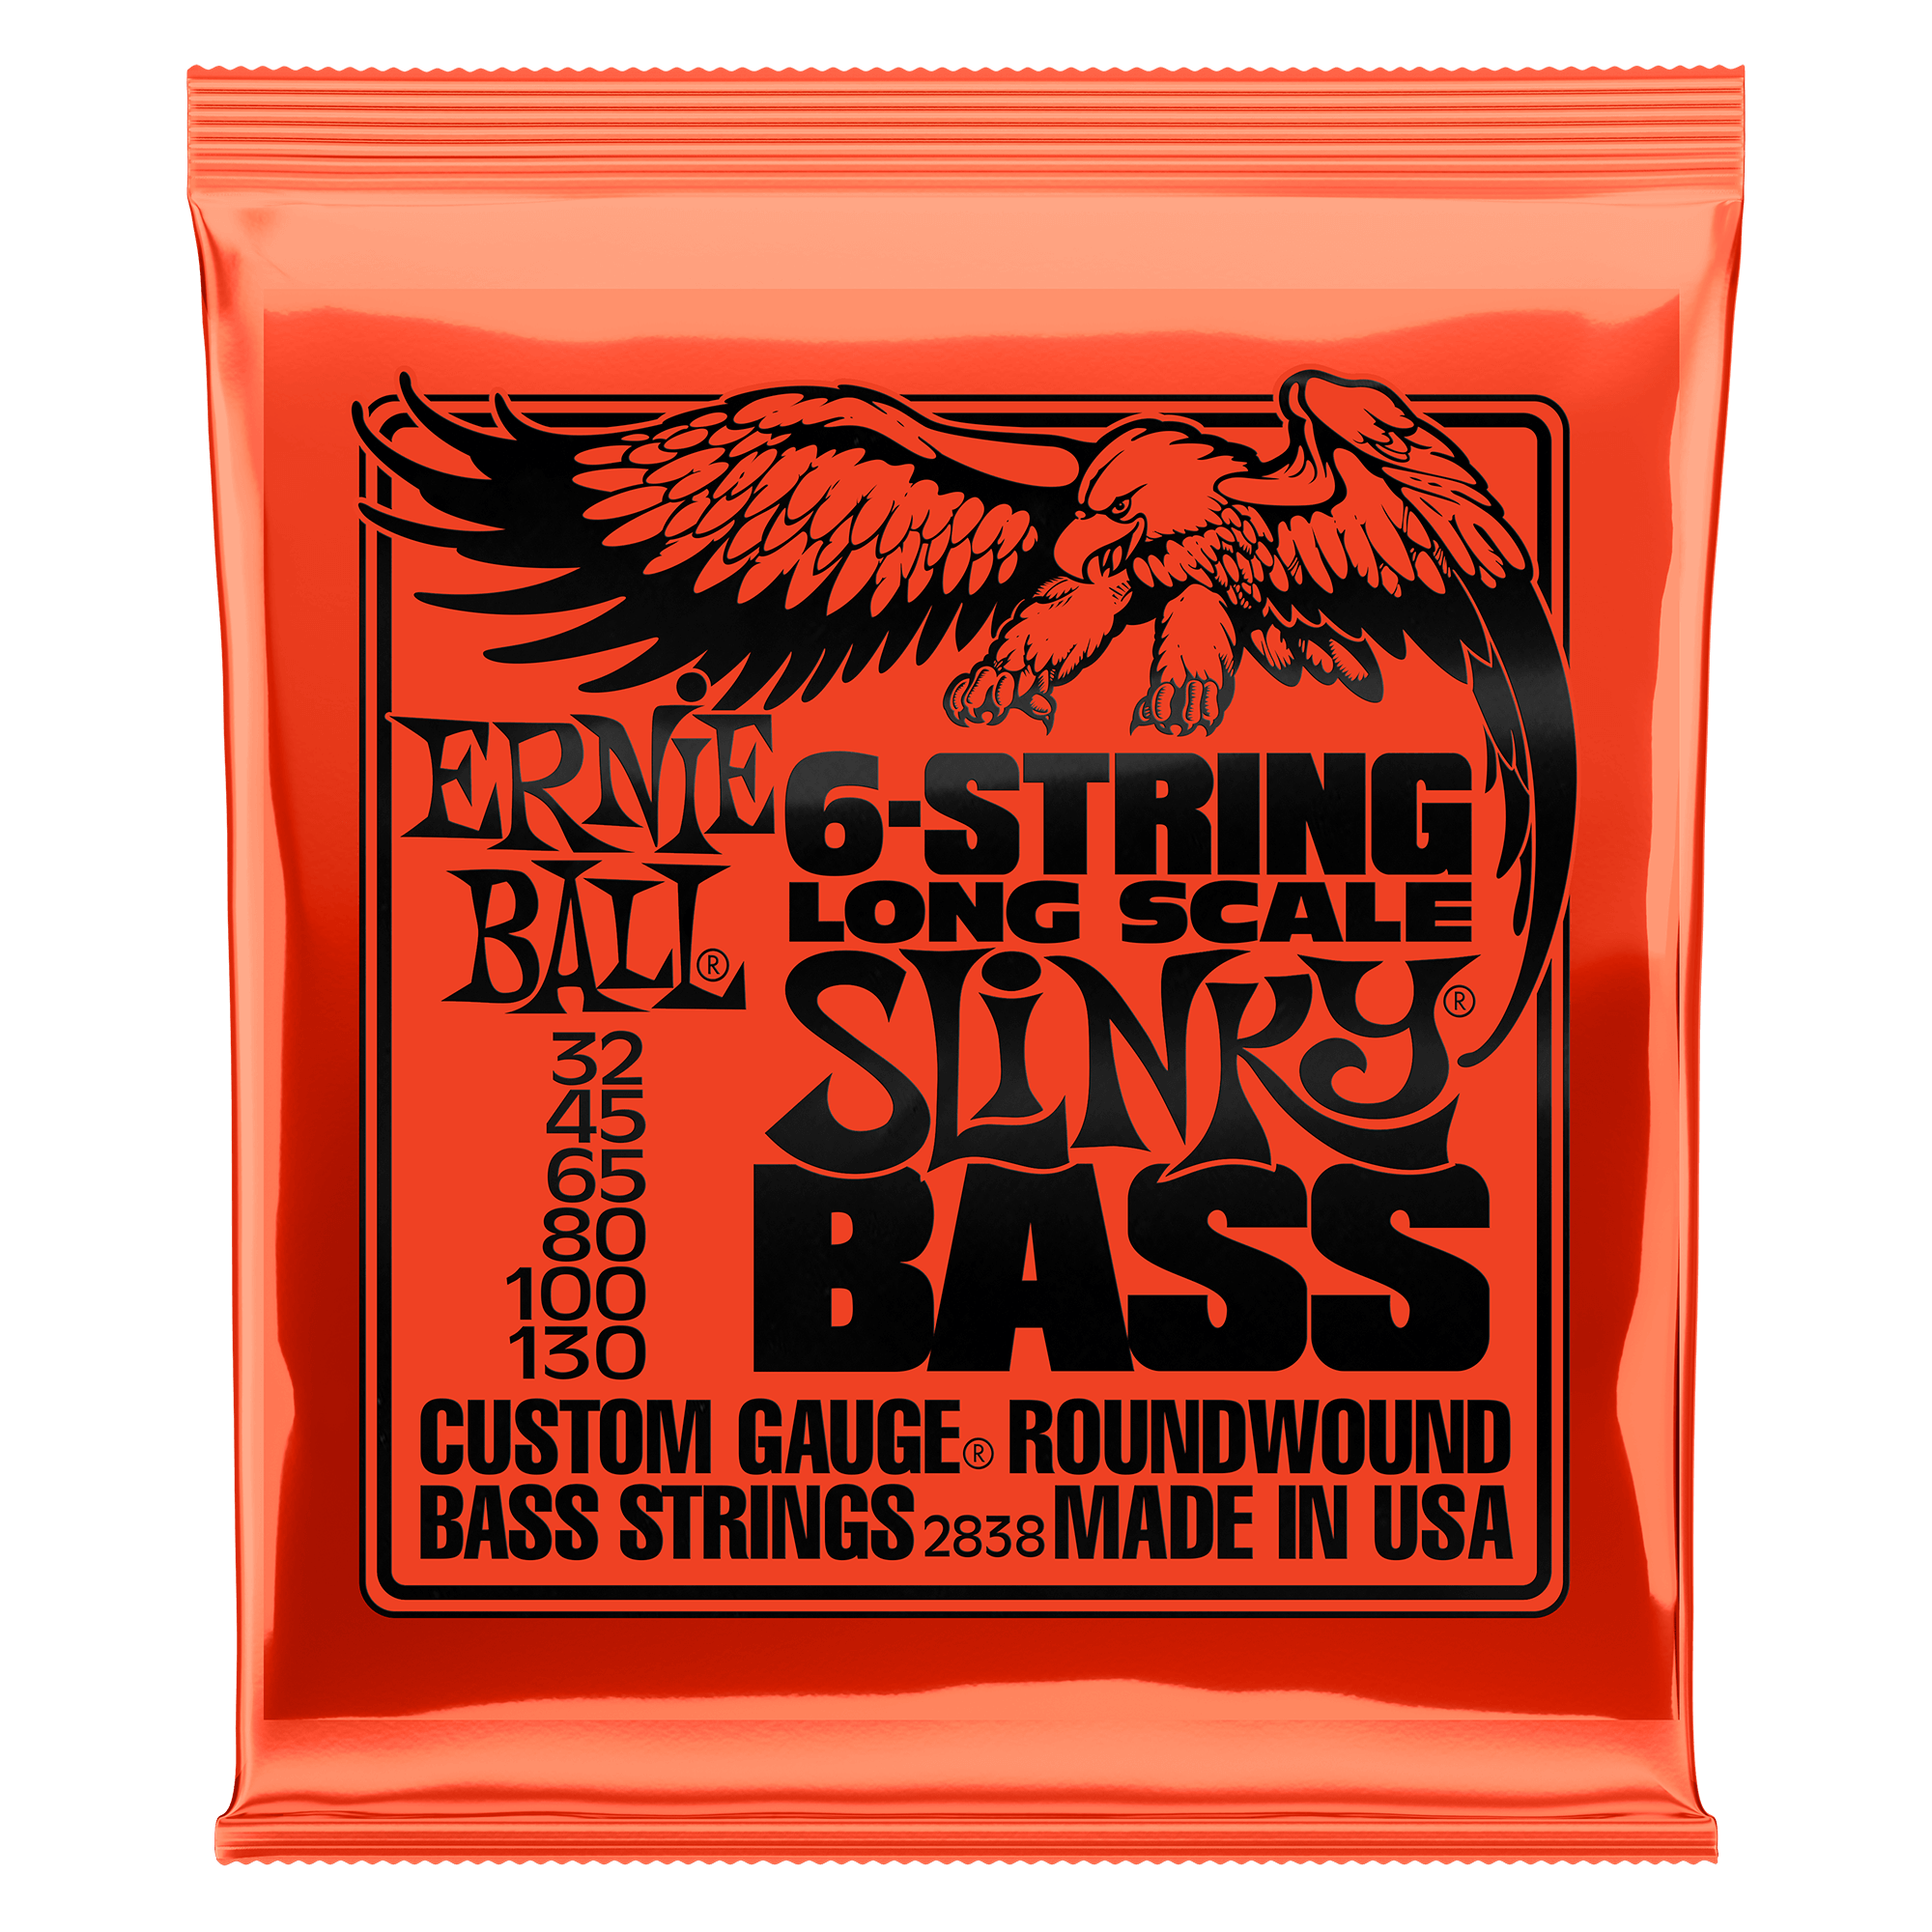 Se Ernie Ball 2838 Slinky Bass 6-strenget bas-strenge hos Music2you